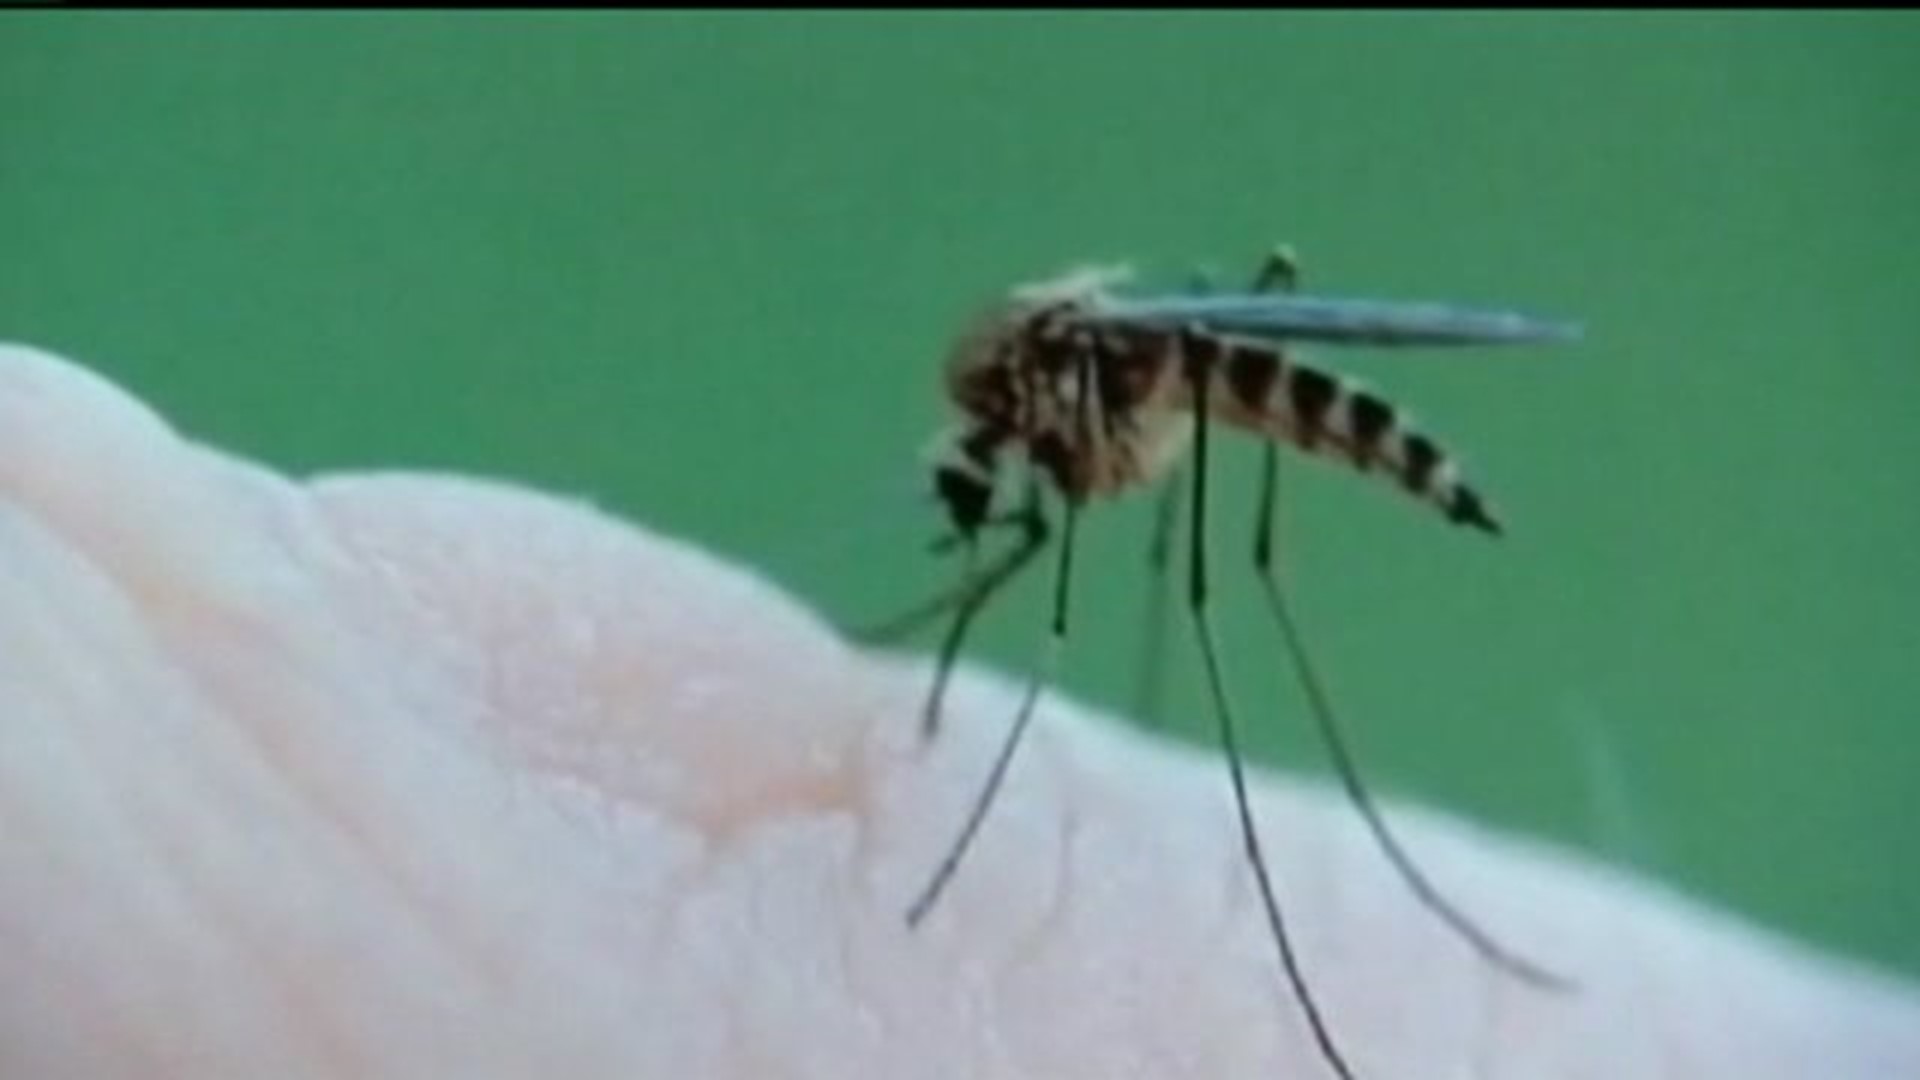 Mosquito-borne virus worries CDC